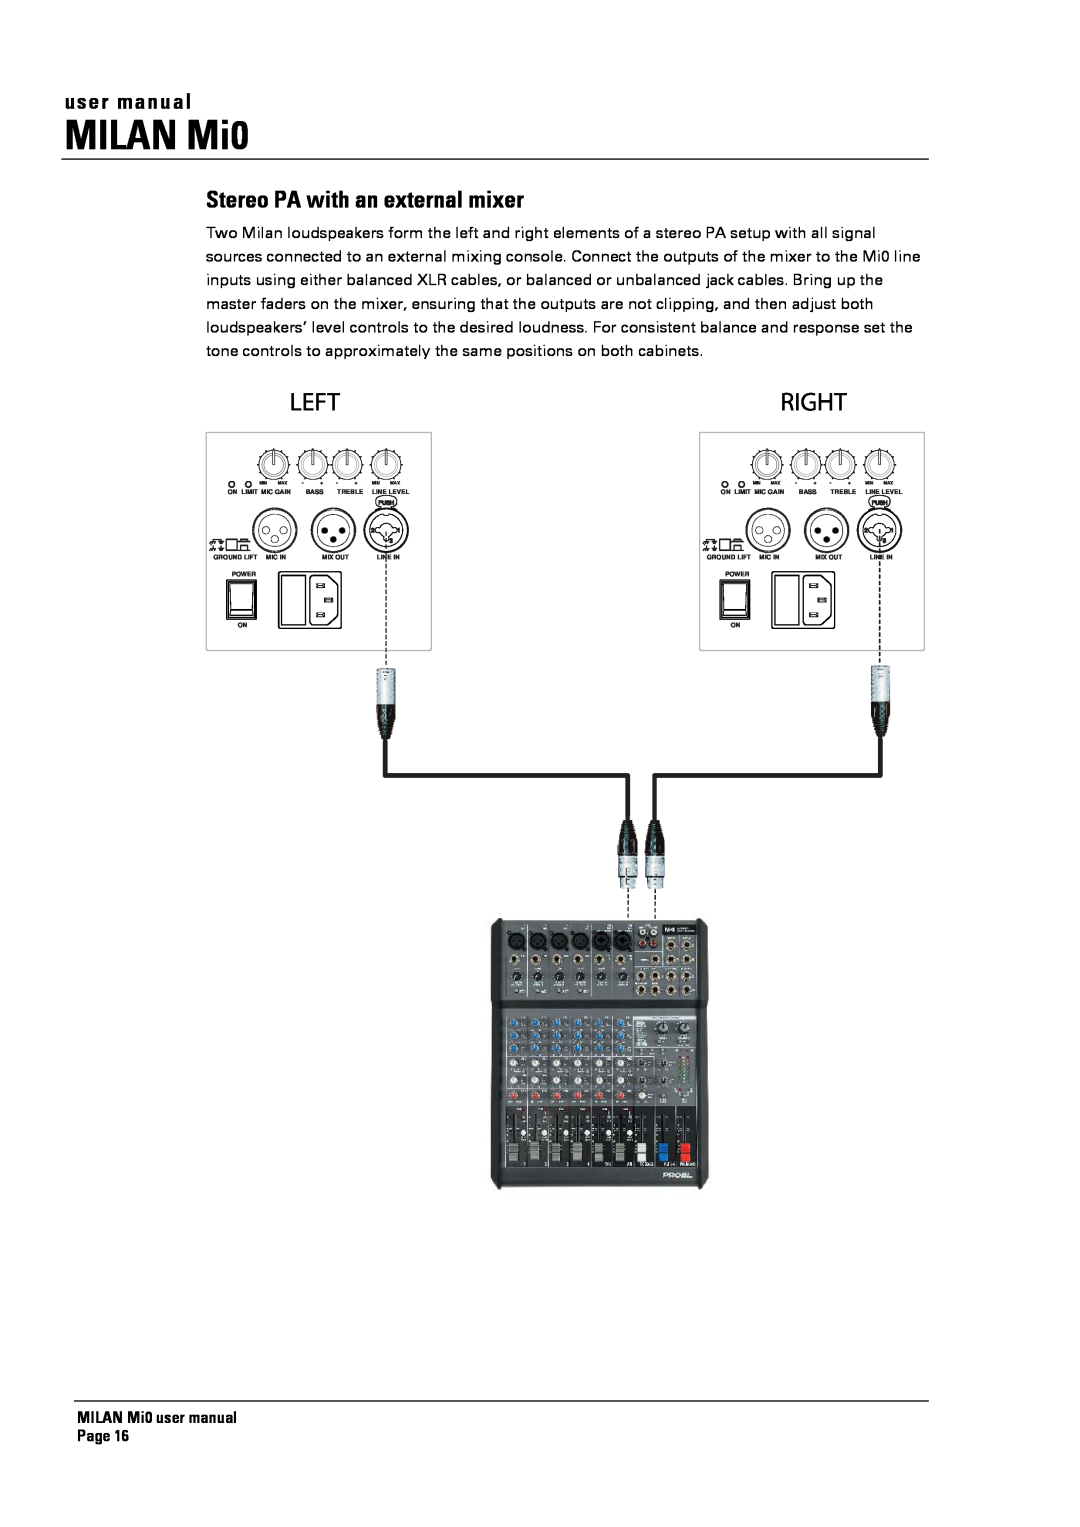 Turbosound Milan Mi0 manual Stereo PA with an external mixer, MILAN Mi0, Left, Right 